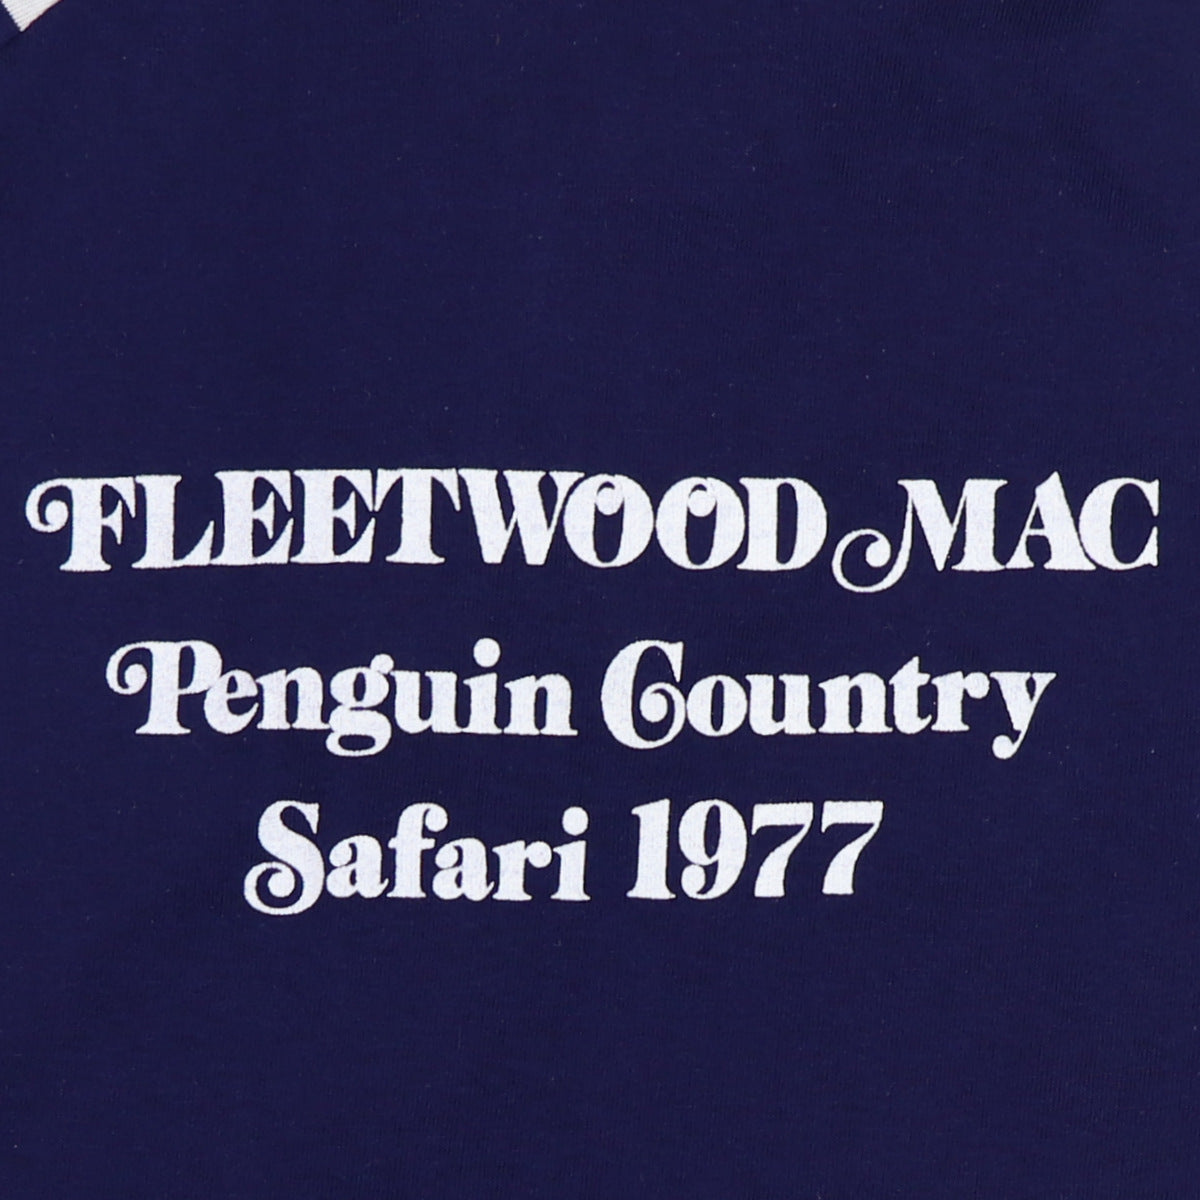 1977 Fleetwood Mac Penguin Country Safari Crew Polo Shirt